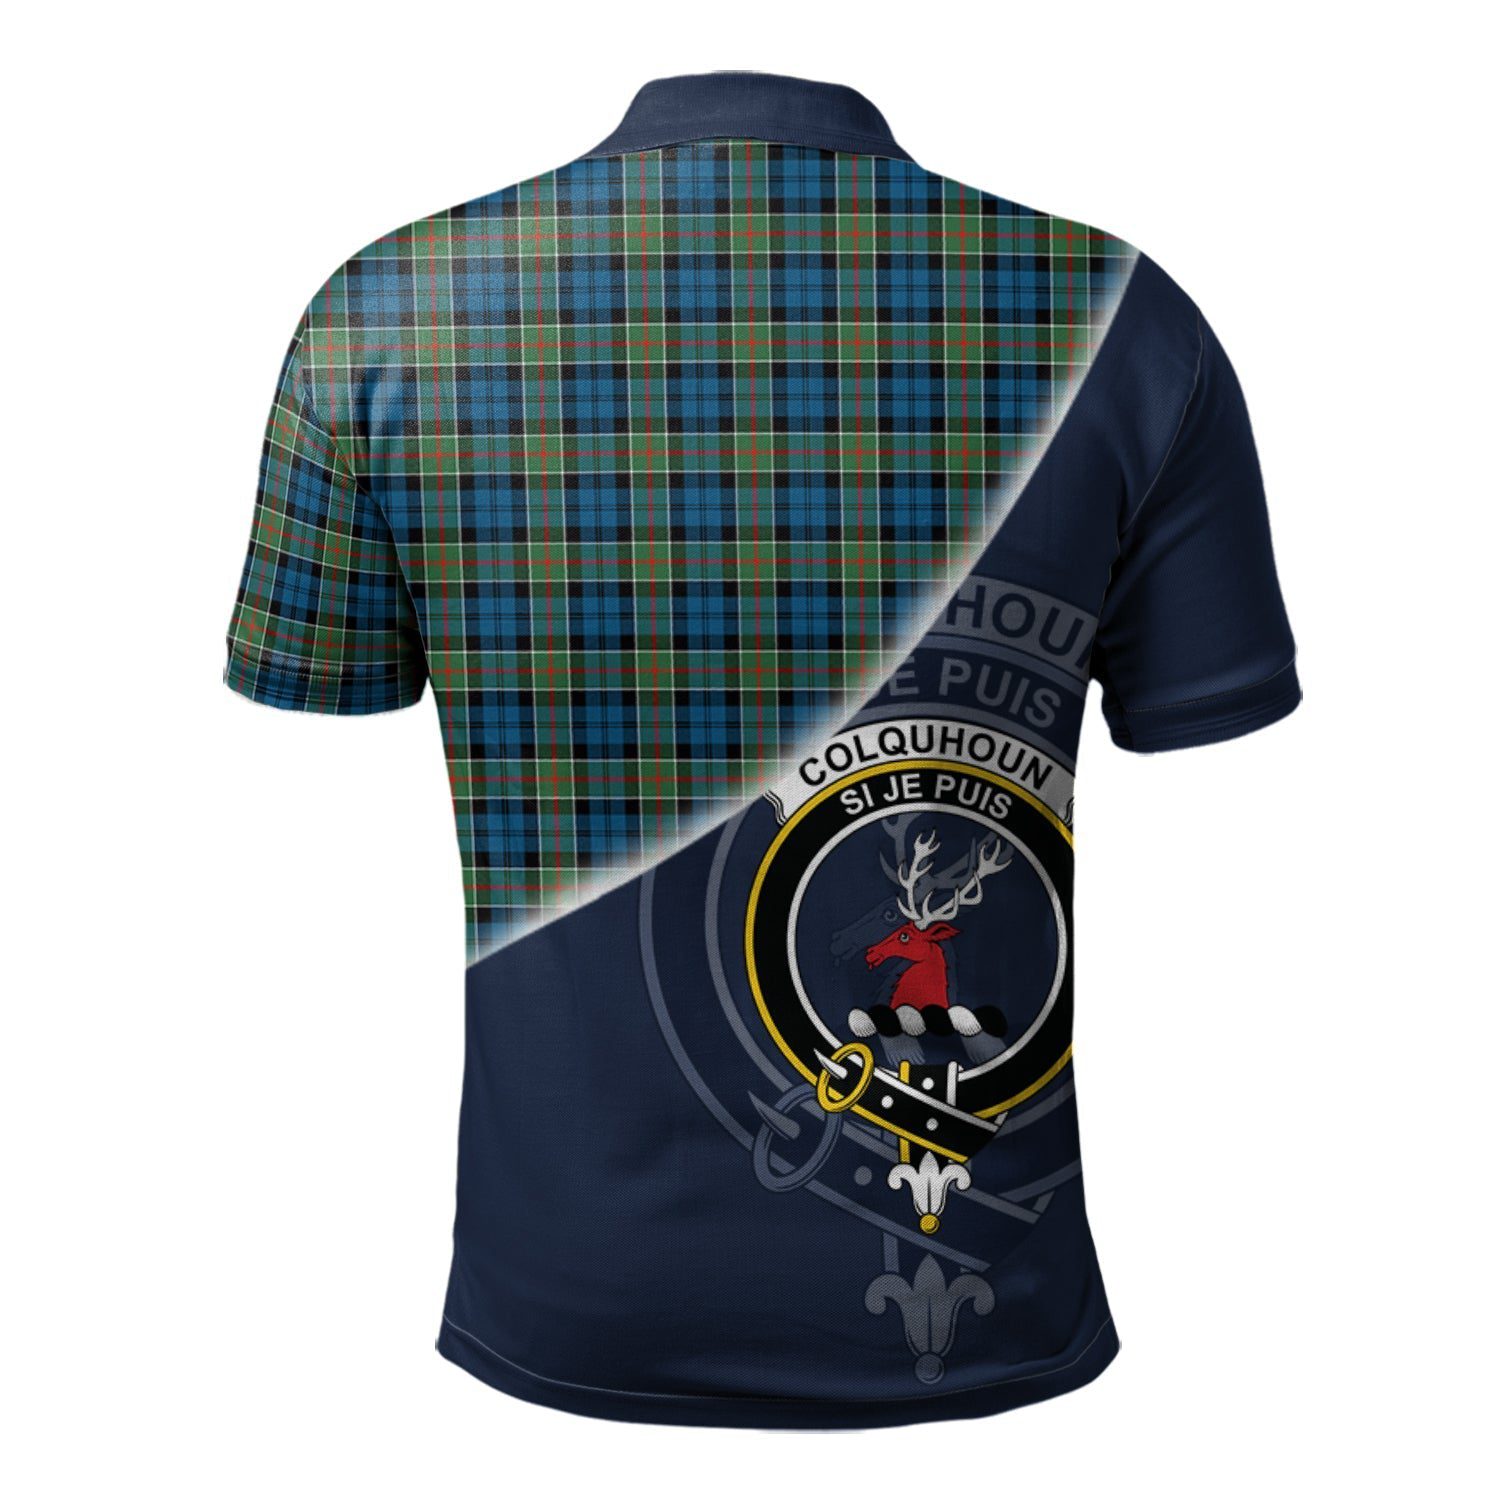 Colquhoun Ancient Clan Scotland Golf Polo, Tartan Mens Polo Shirts with Scottish Flag Half Style K23